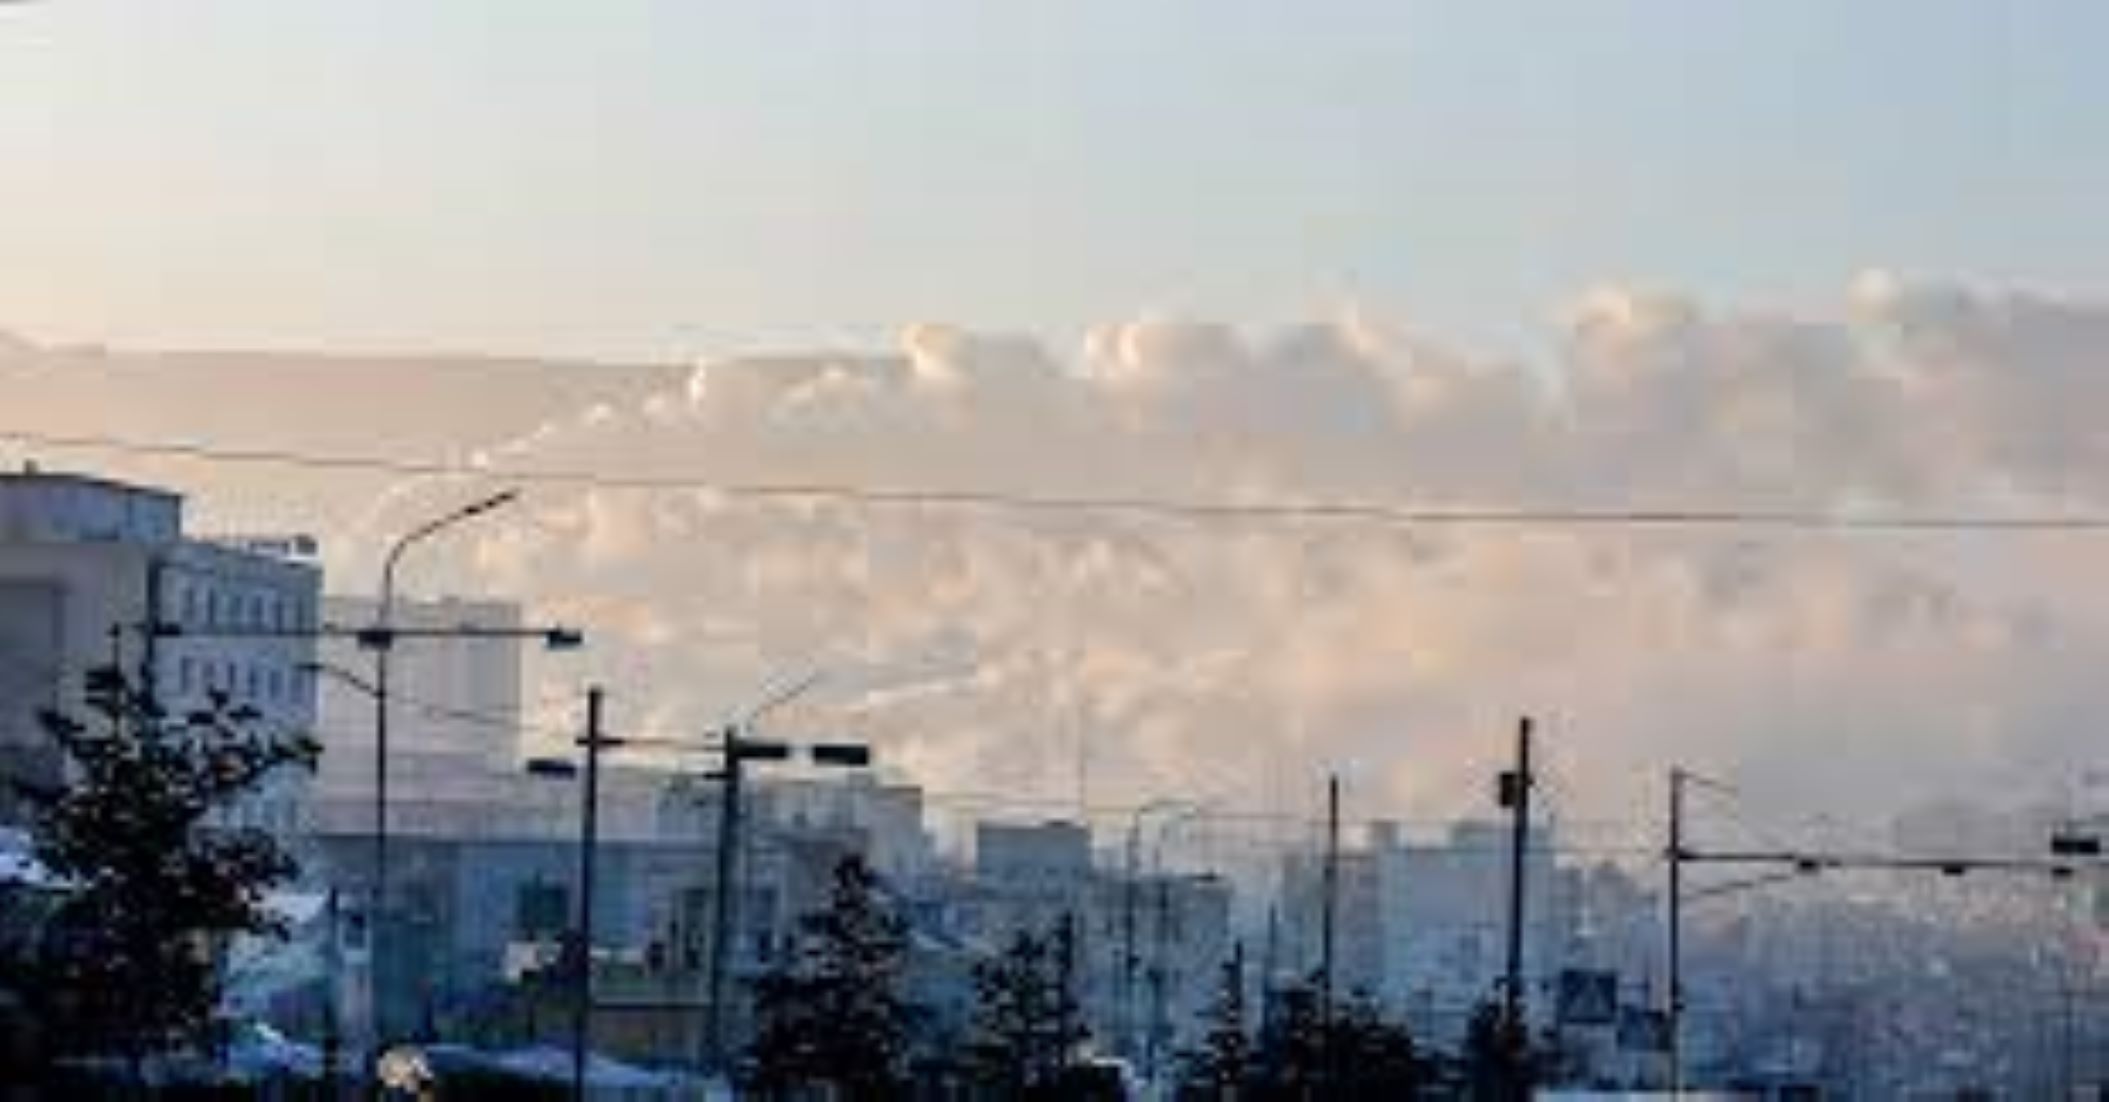 Air Pollution In Mongolia’s Capital Draws Public Concern